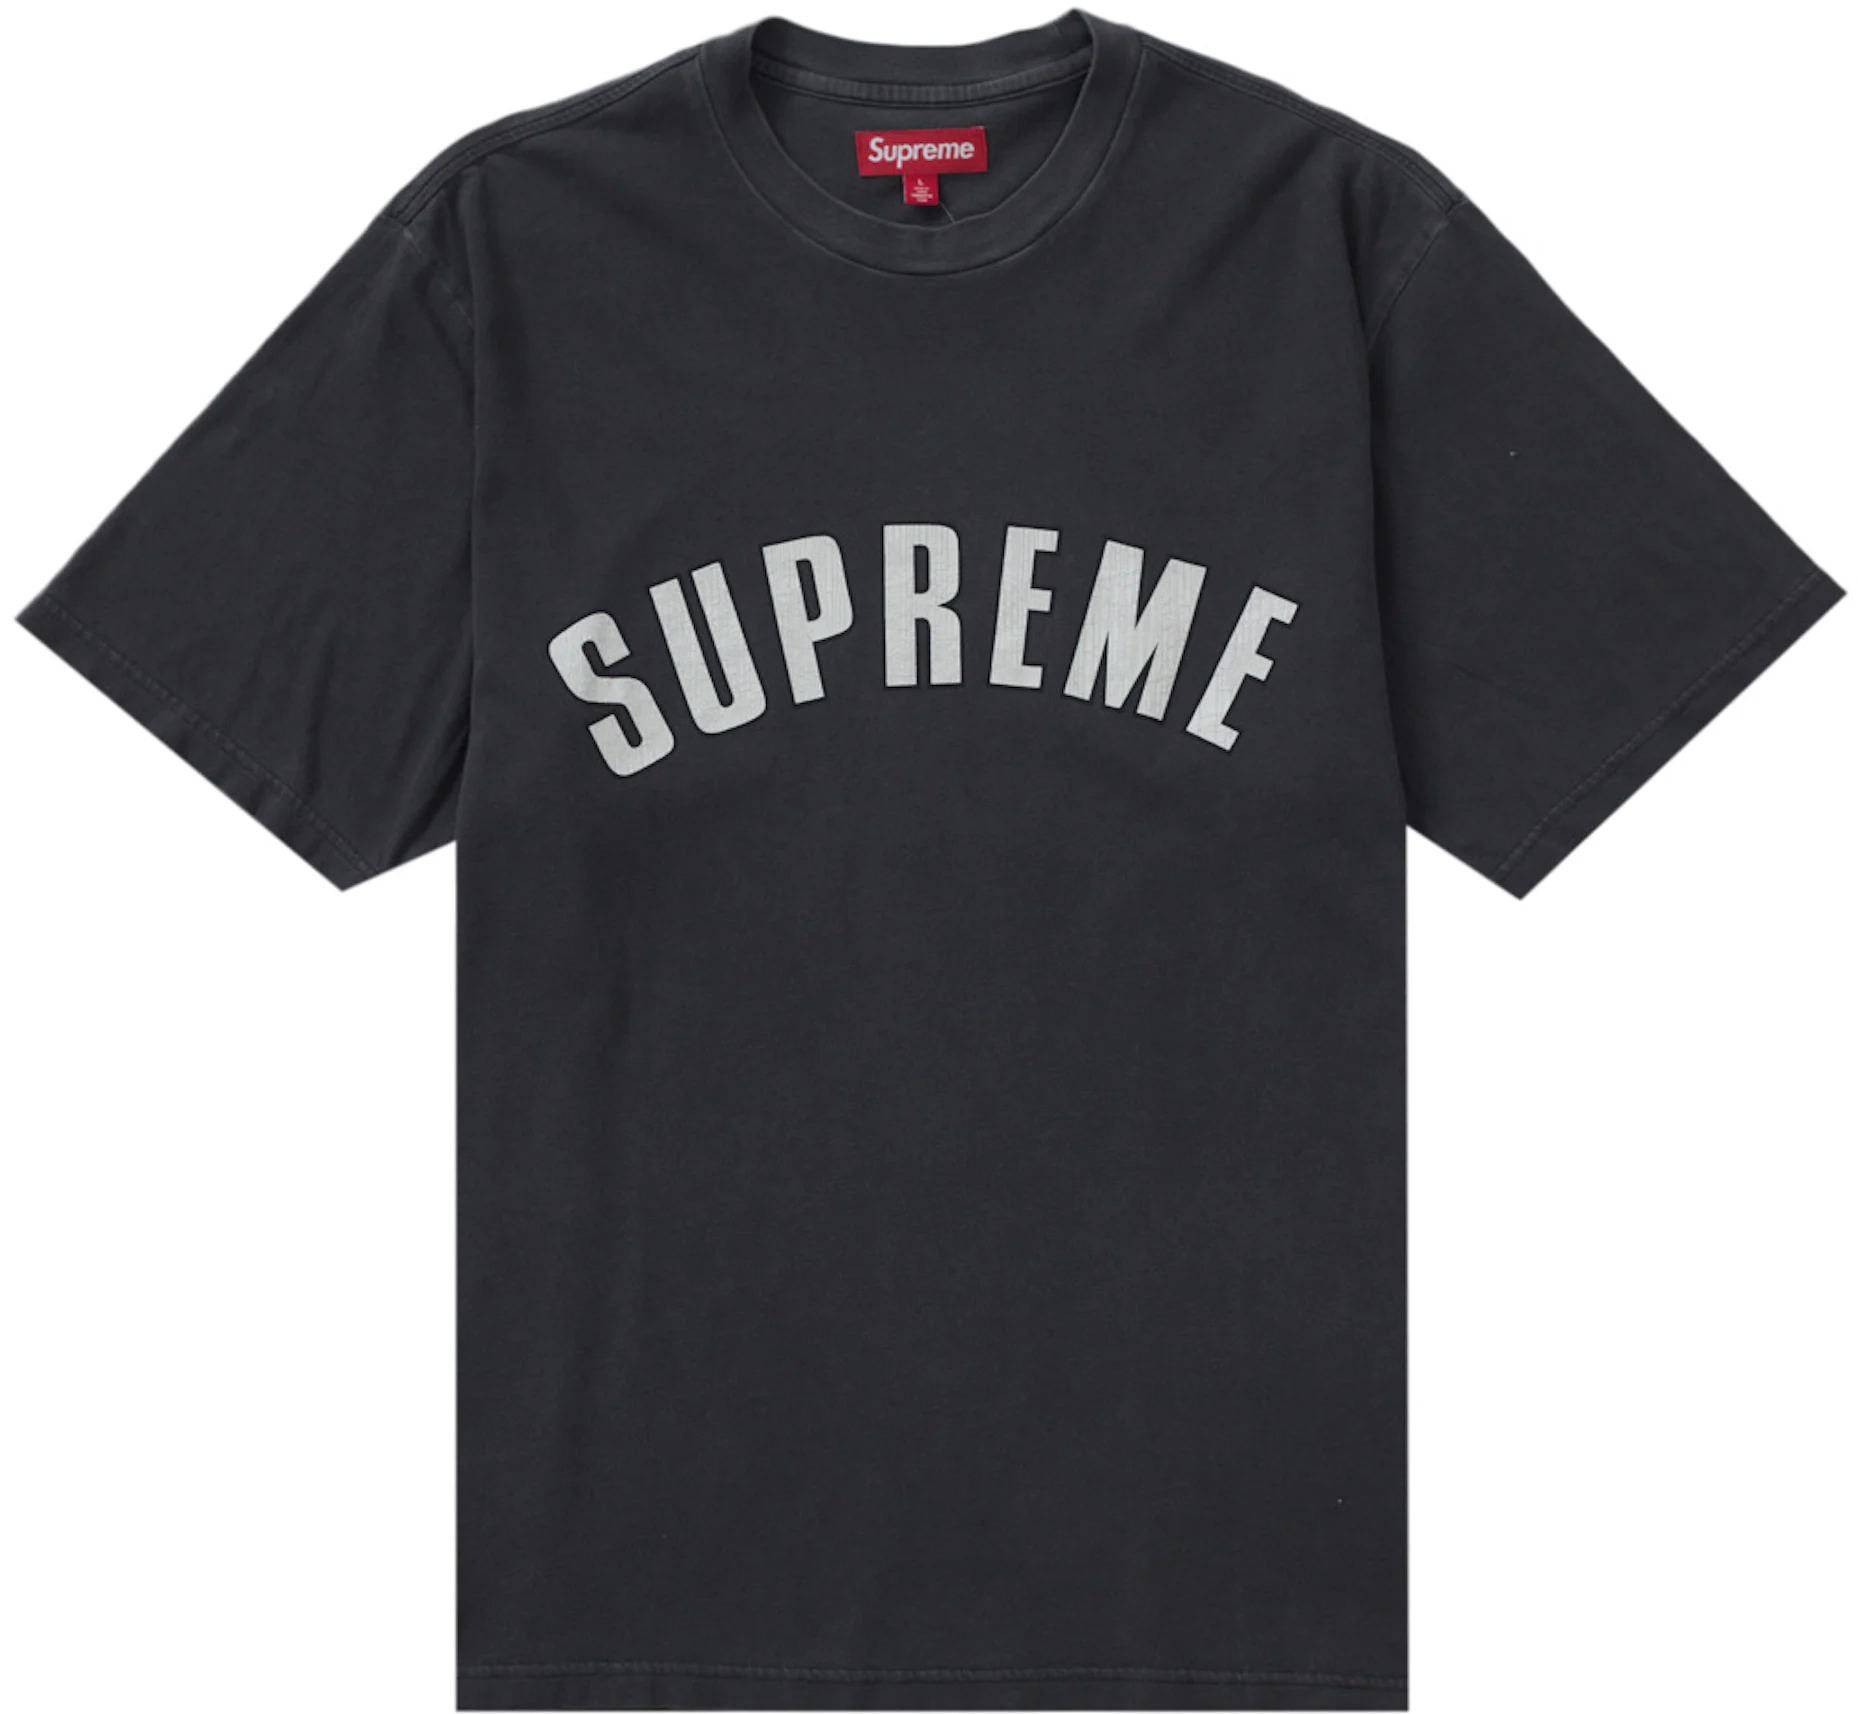 Super-m SUPREME T-shirt -  Canada